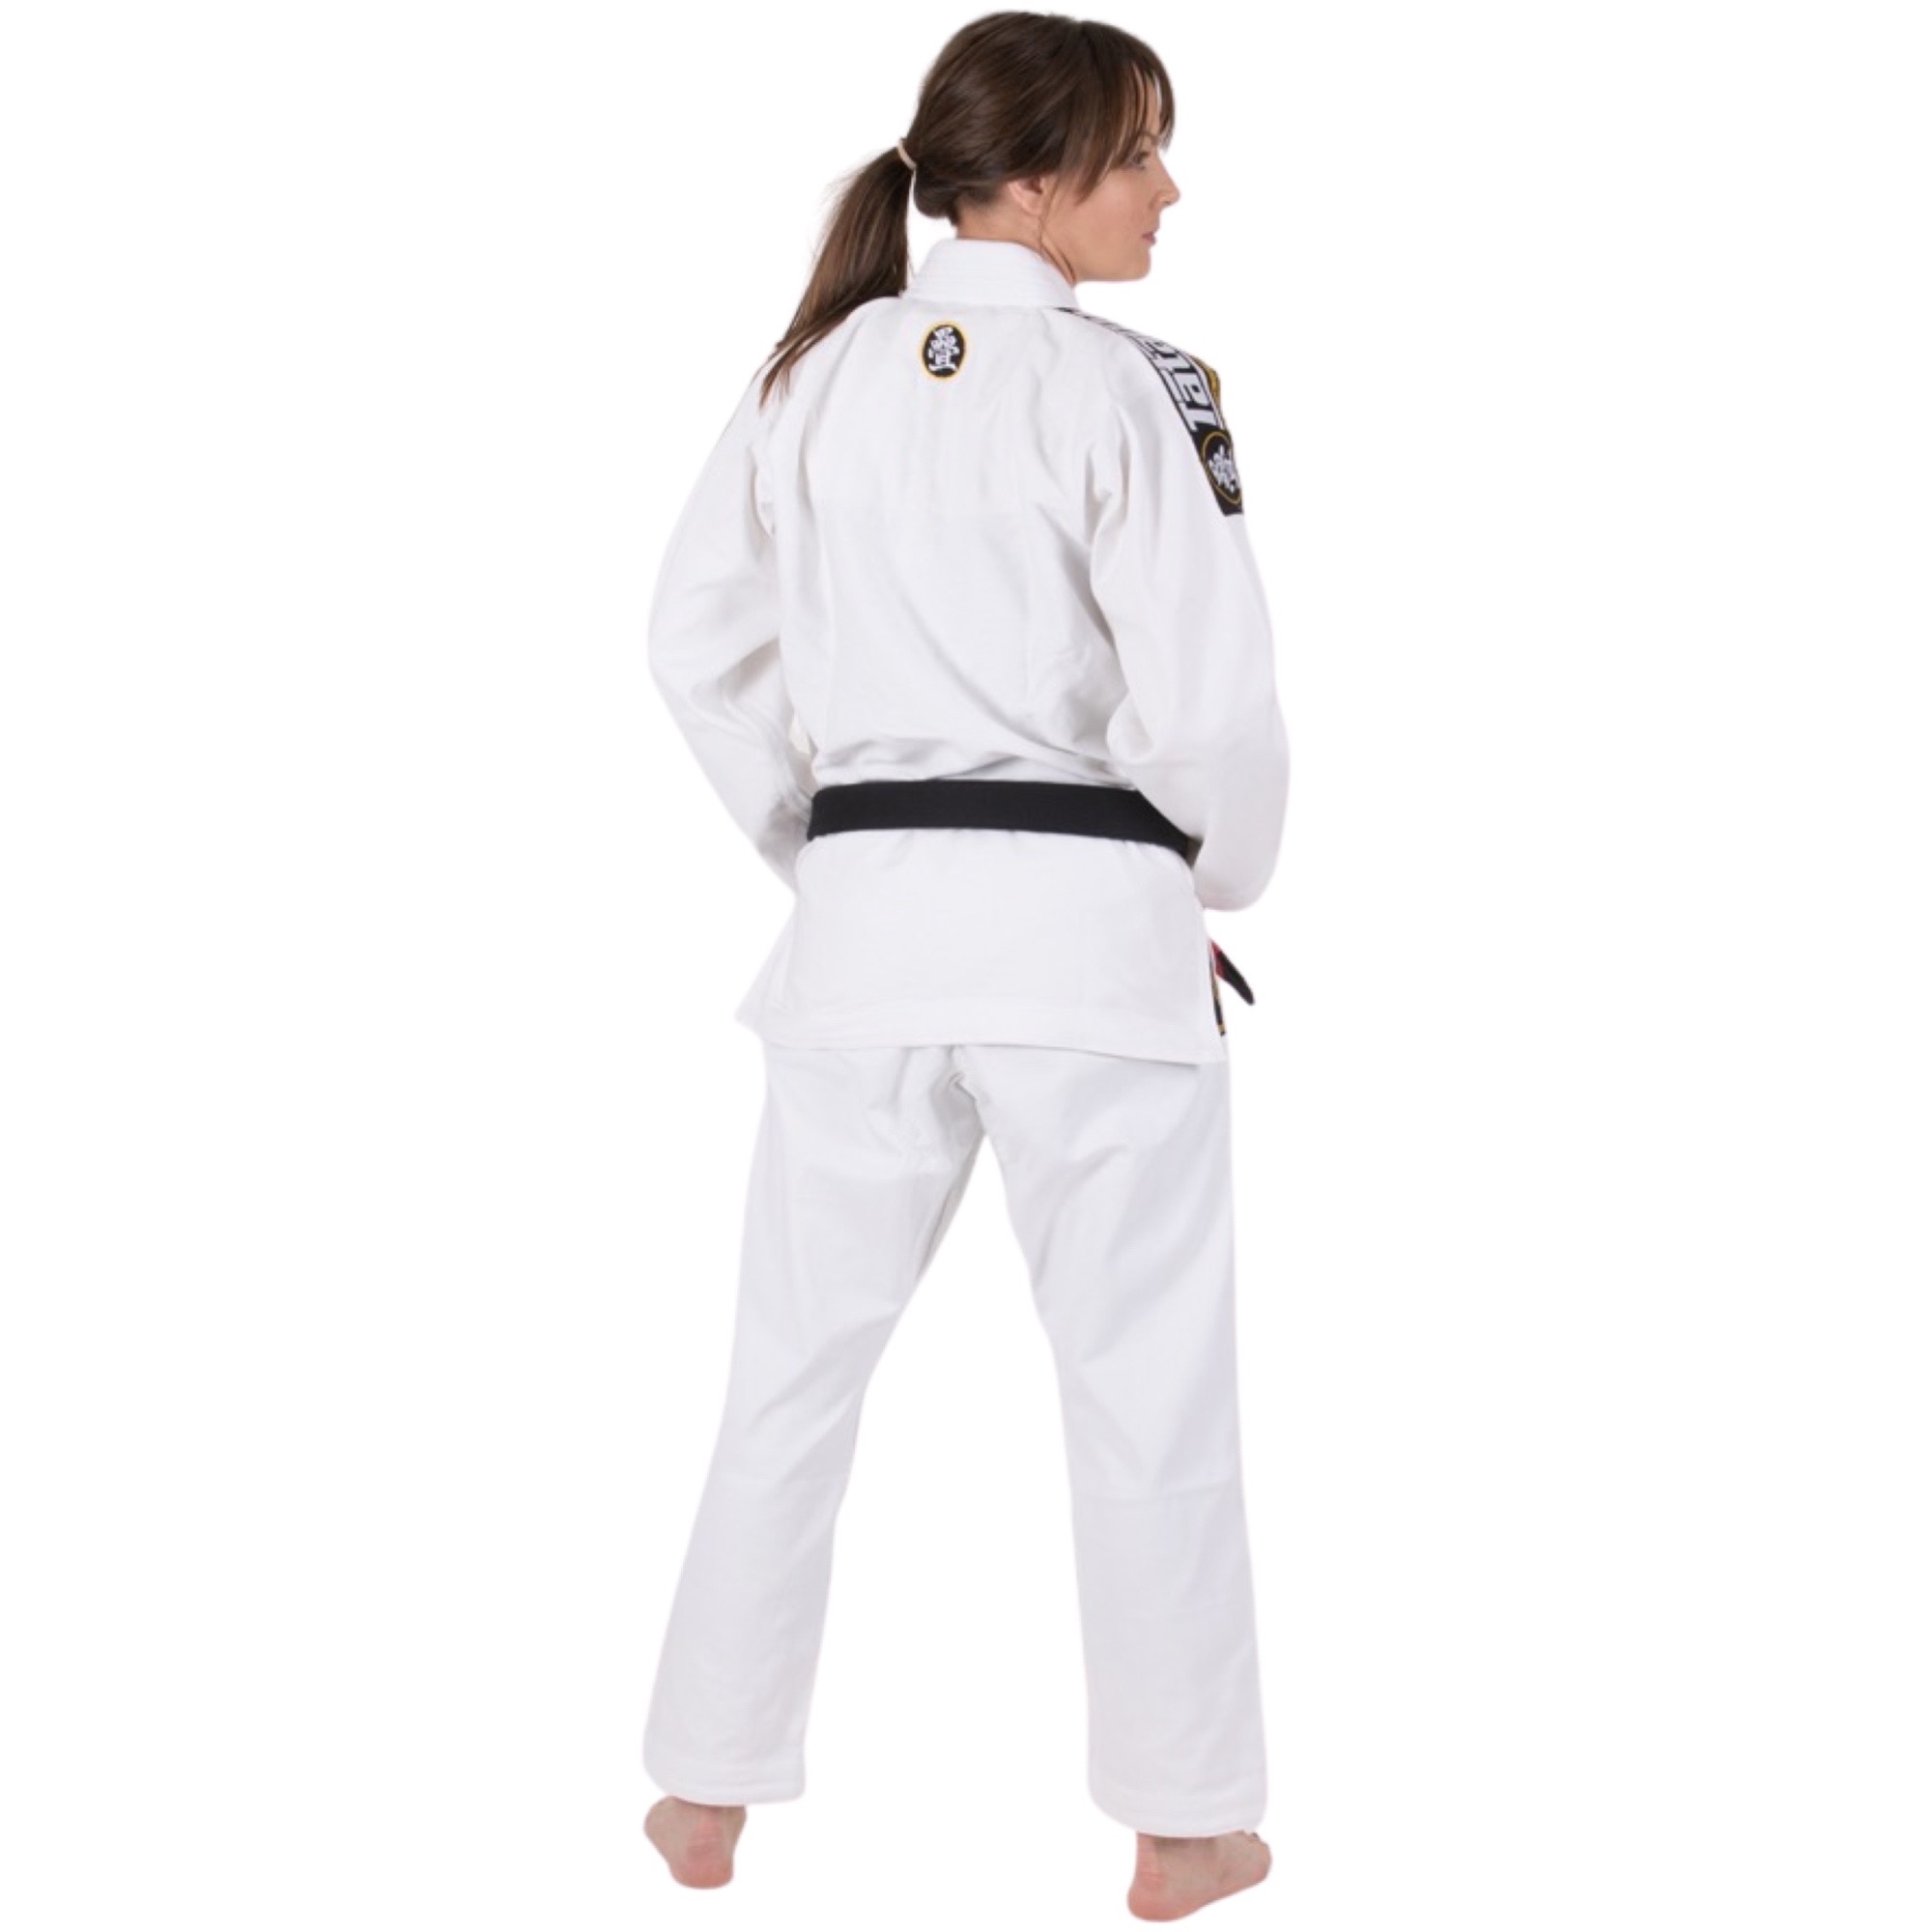 Tatami Ladies BJJ Gi Nova Absolute White Jiu Jitsu Kimono Free White Belt 